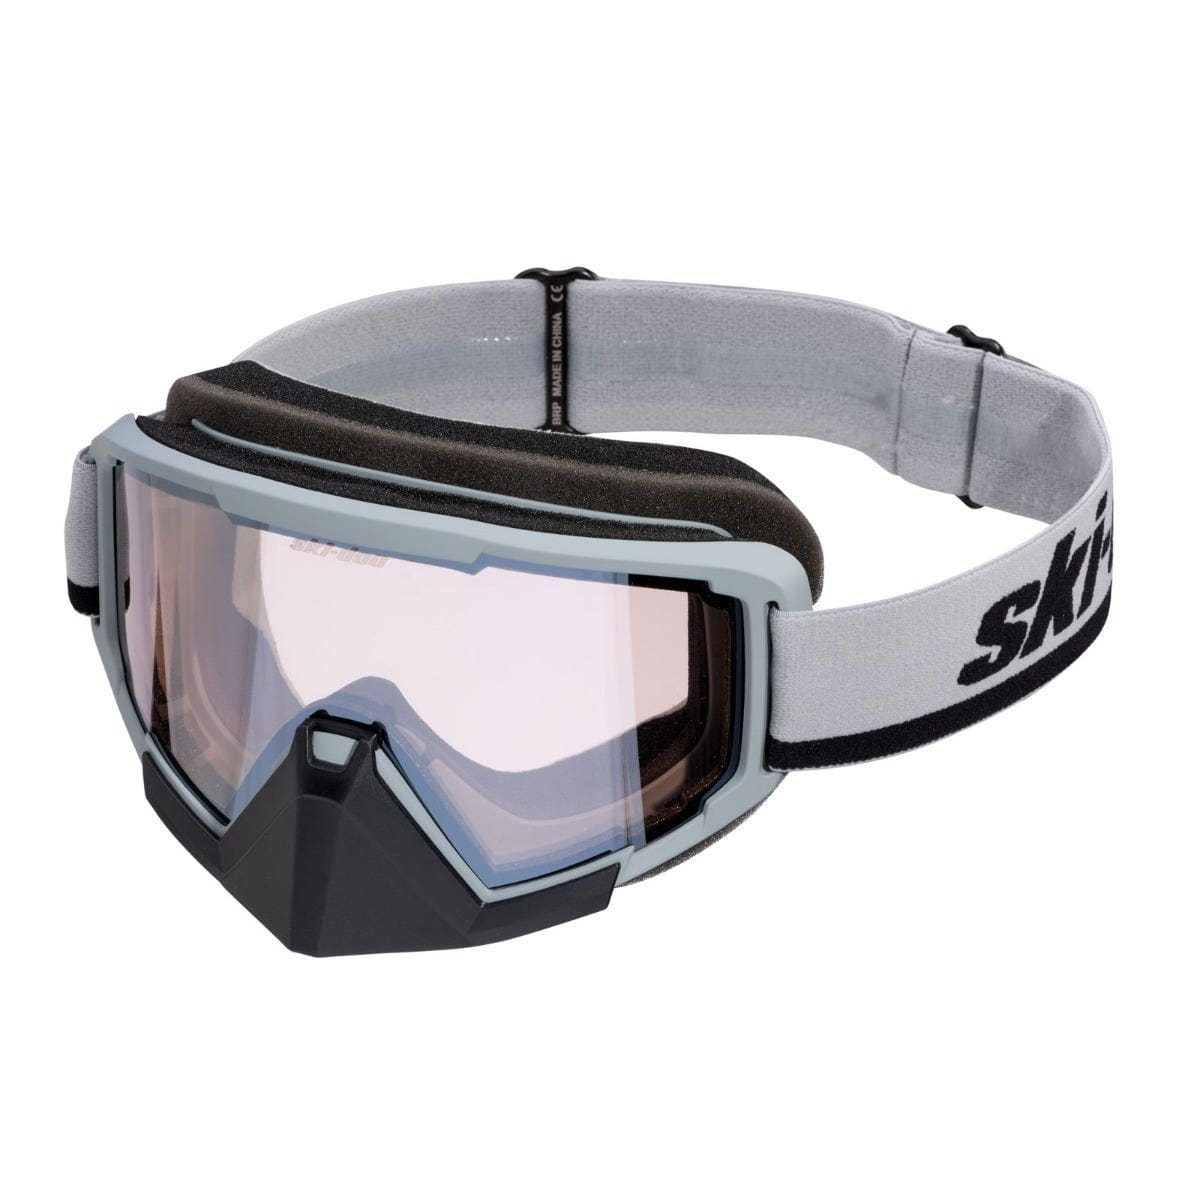 Ski-Doo Trench XL Goggles / Grey / Onesize